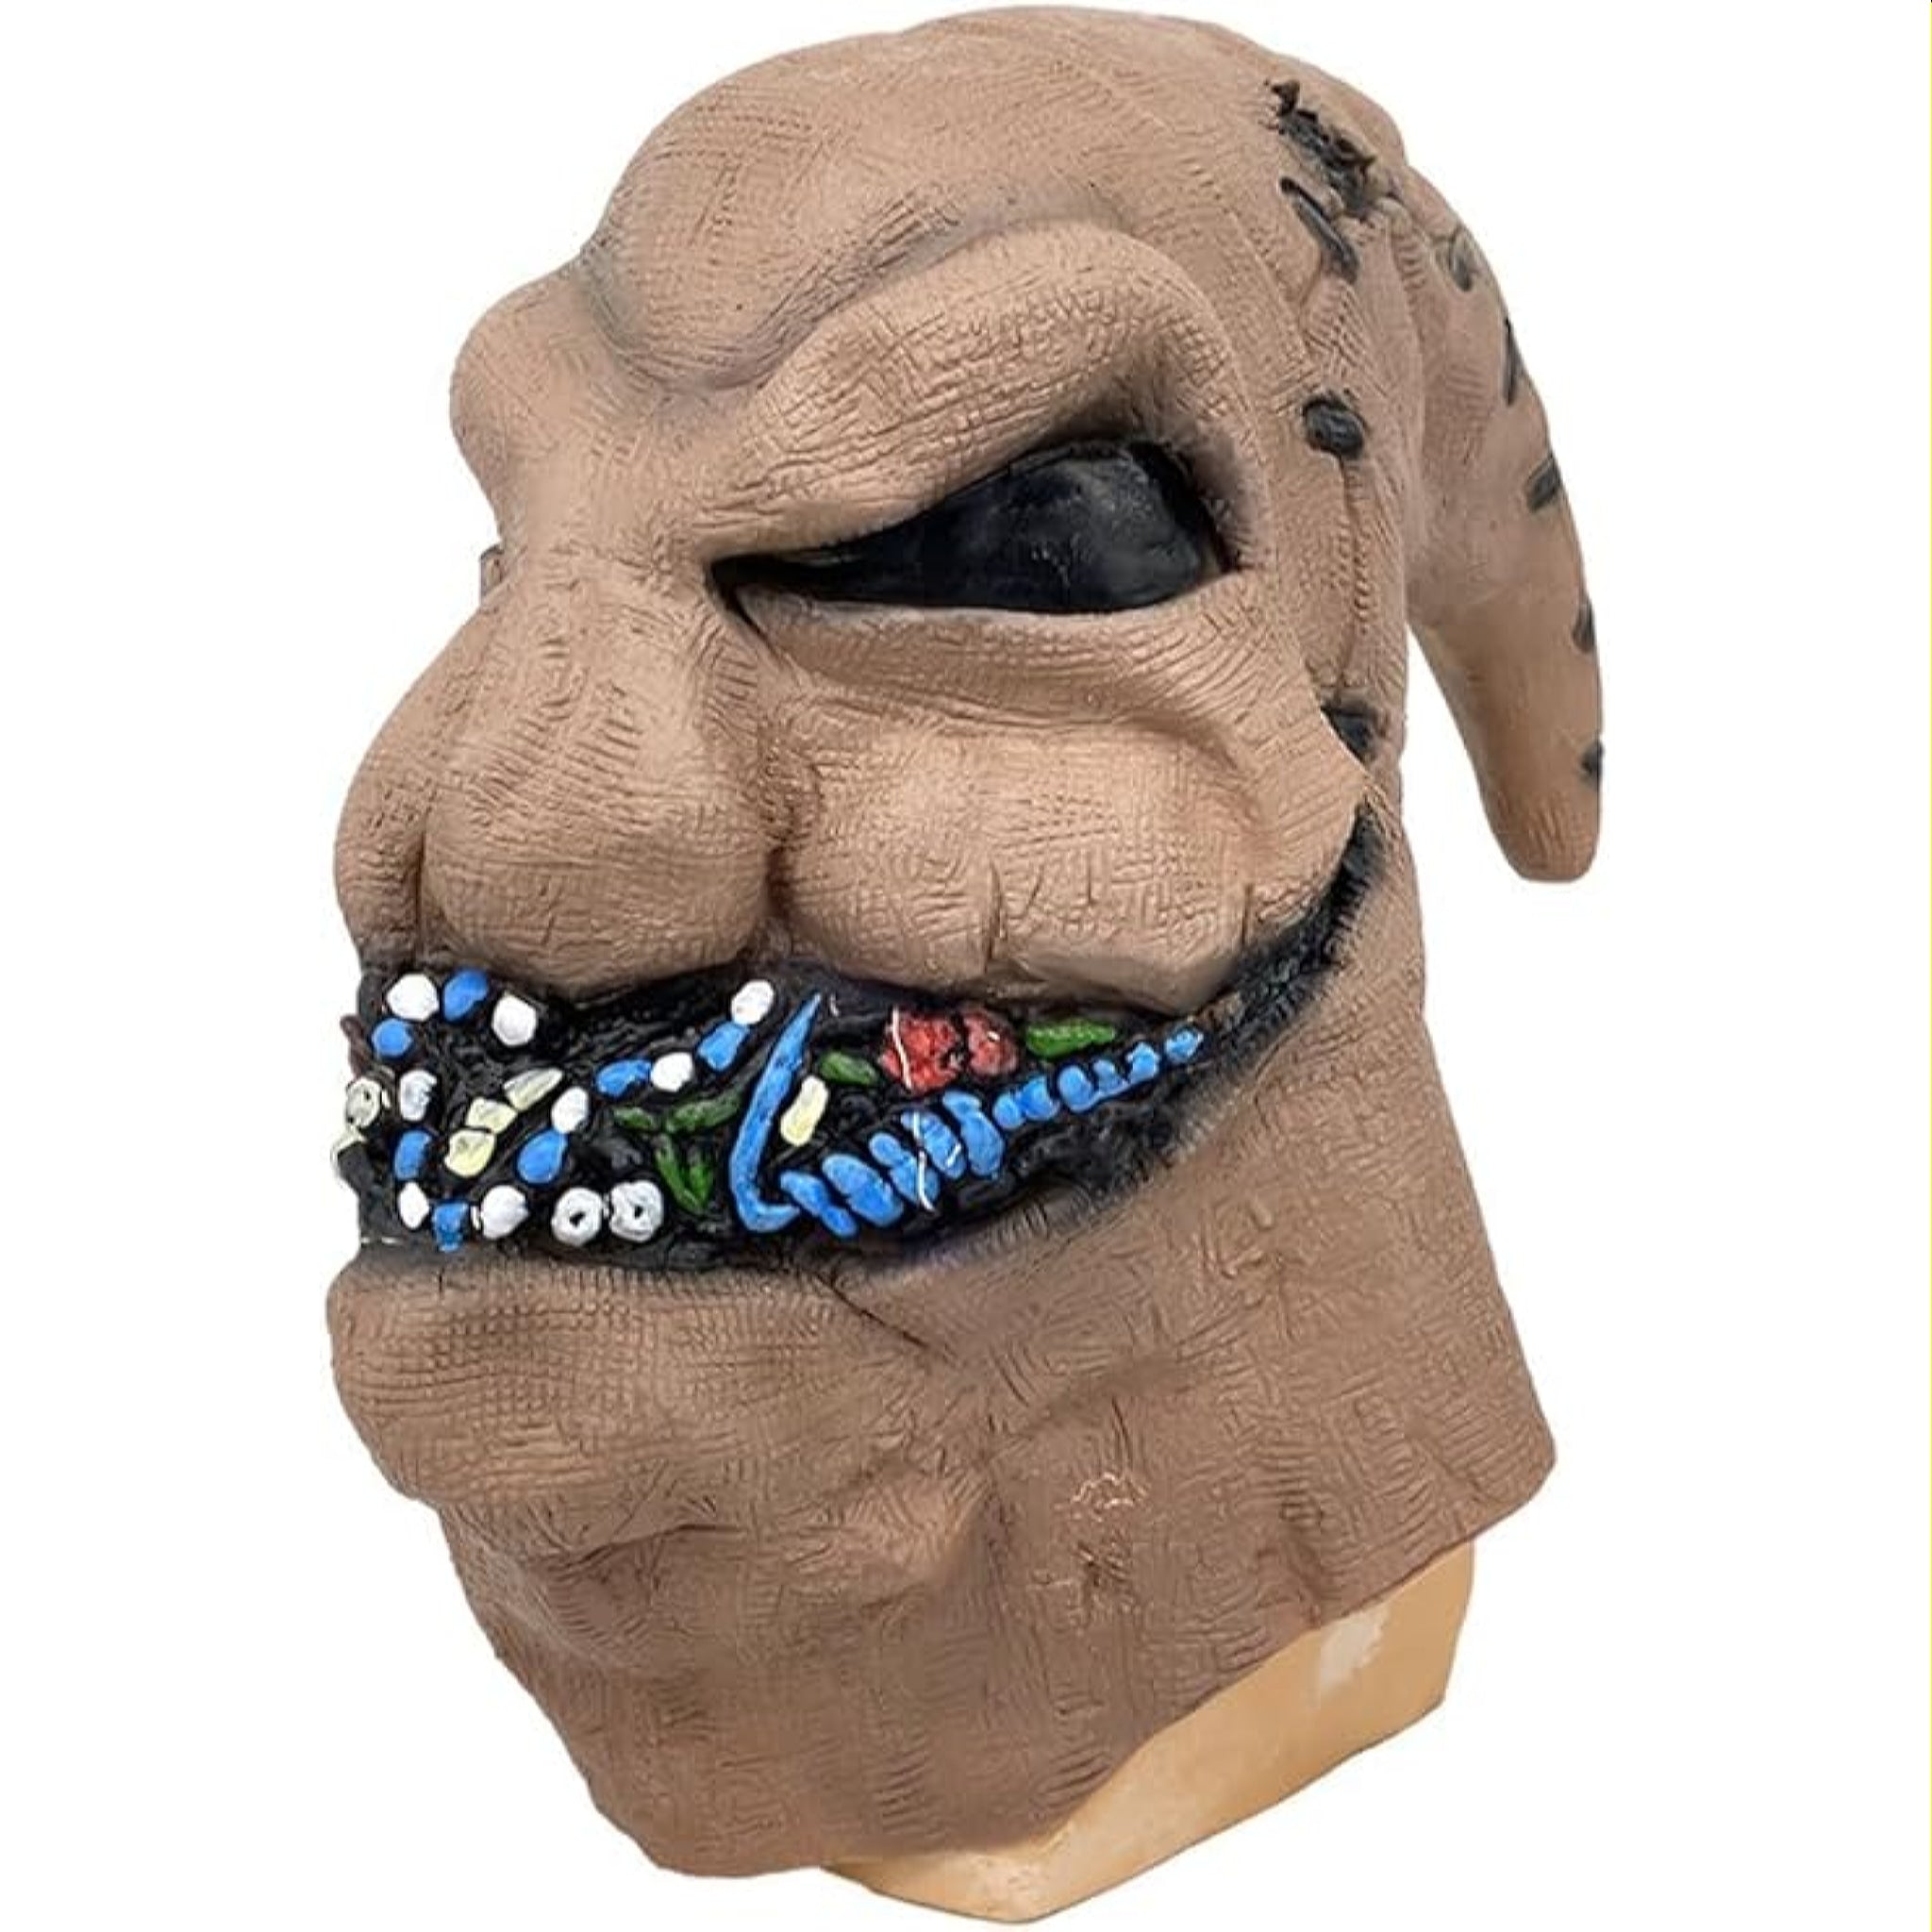 Oogie Boogie Latex Mask Nightmare Before Christmas Halloween Fancy Dress Mask